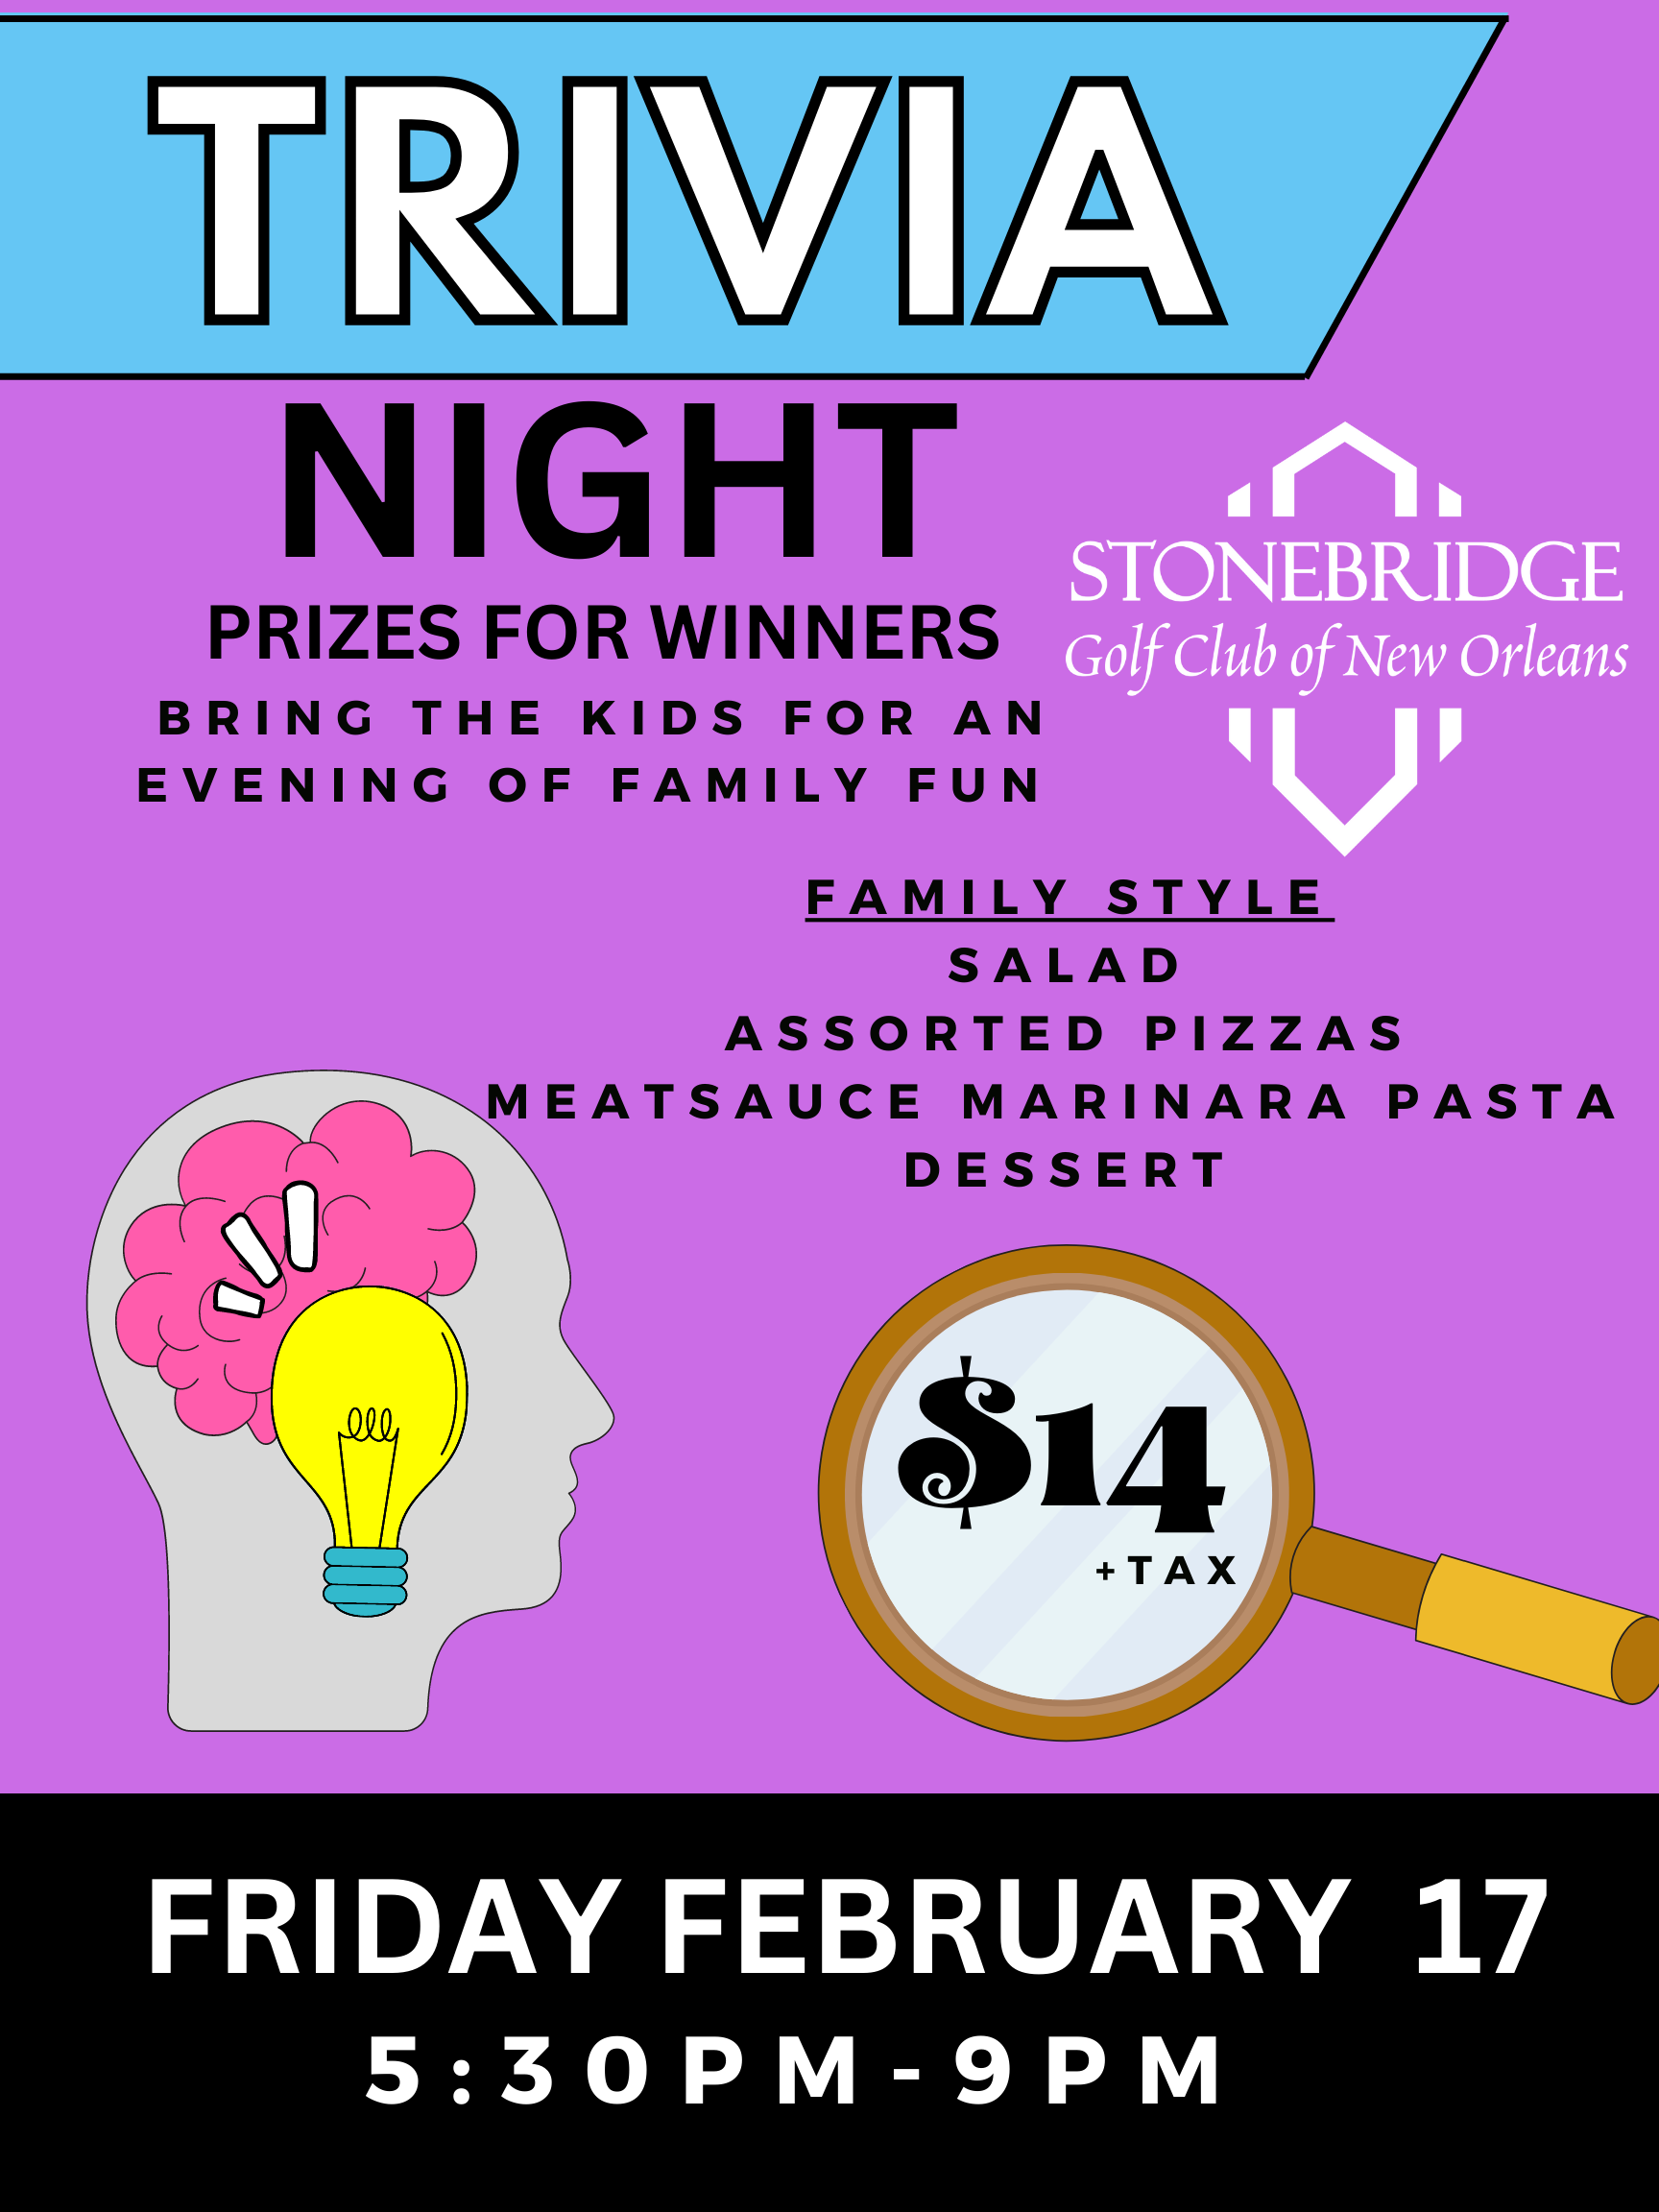 Stonebridge Trivia Night Poster 2